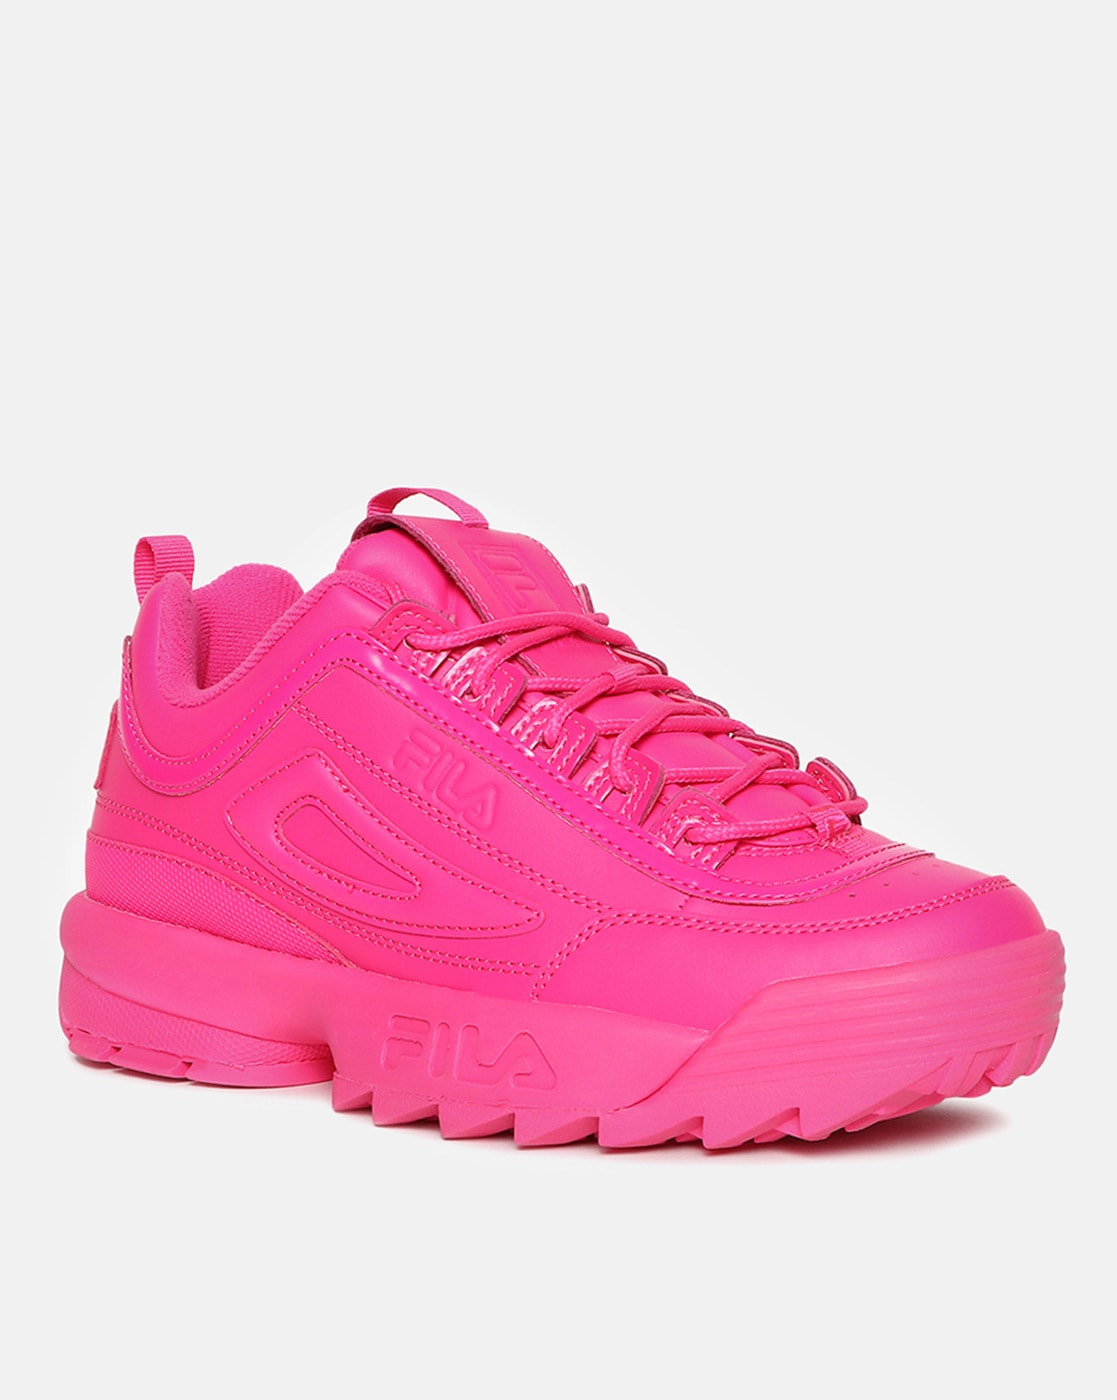 Fila Disruptor Ii Premium Light Pink Shoes | Lupon.Gov.Ph